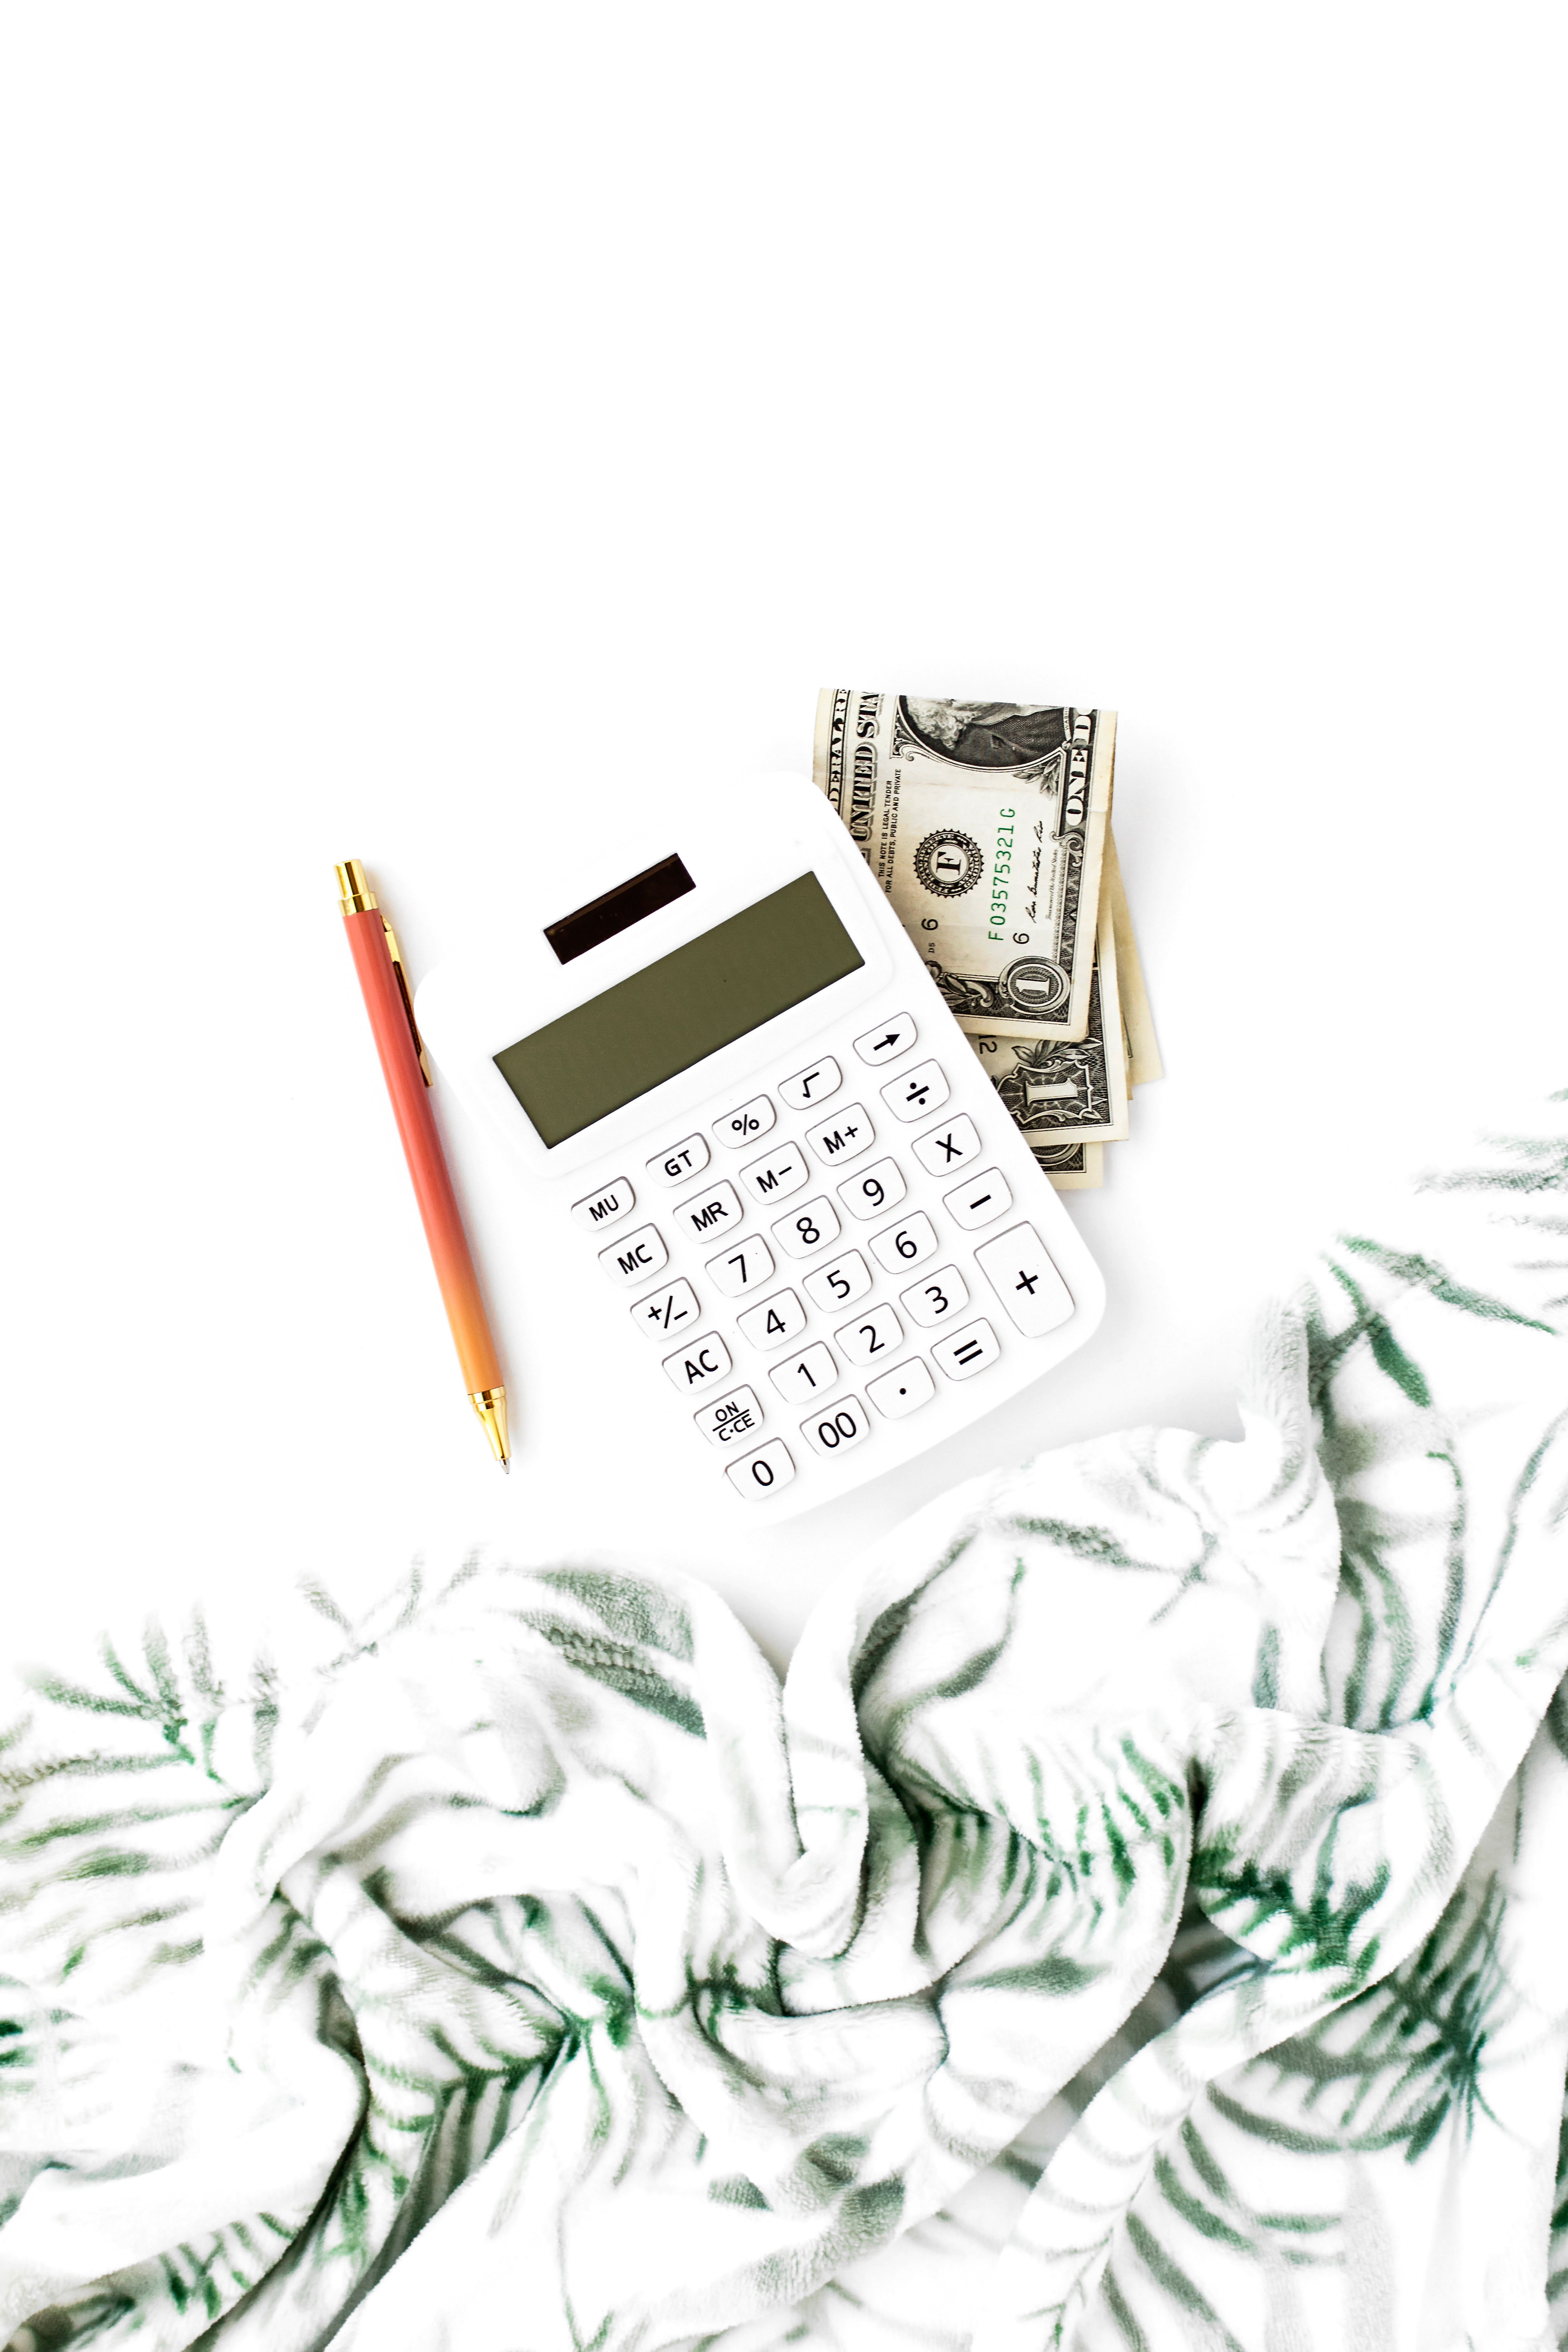 photo of calculator and money